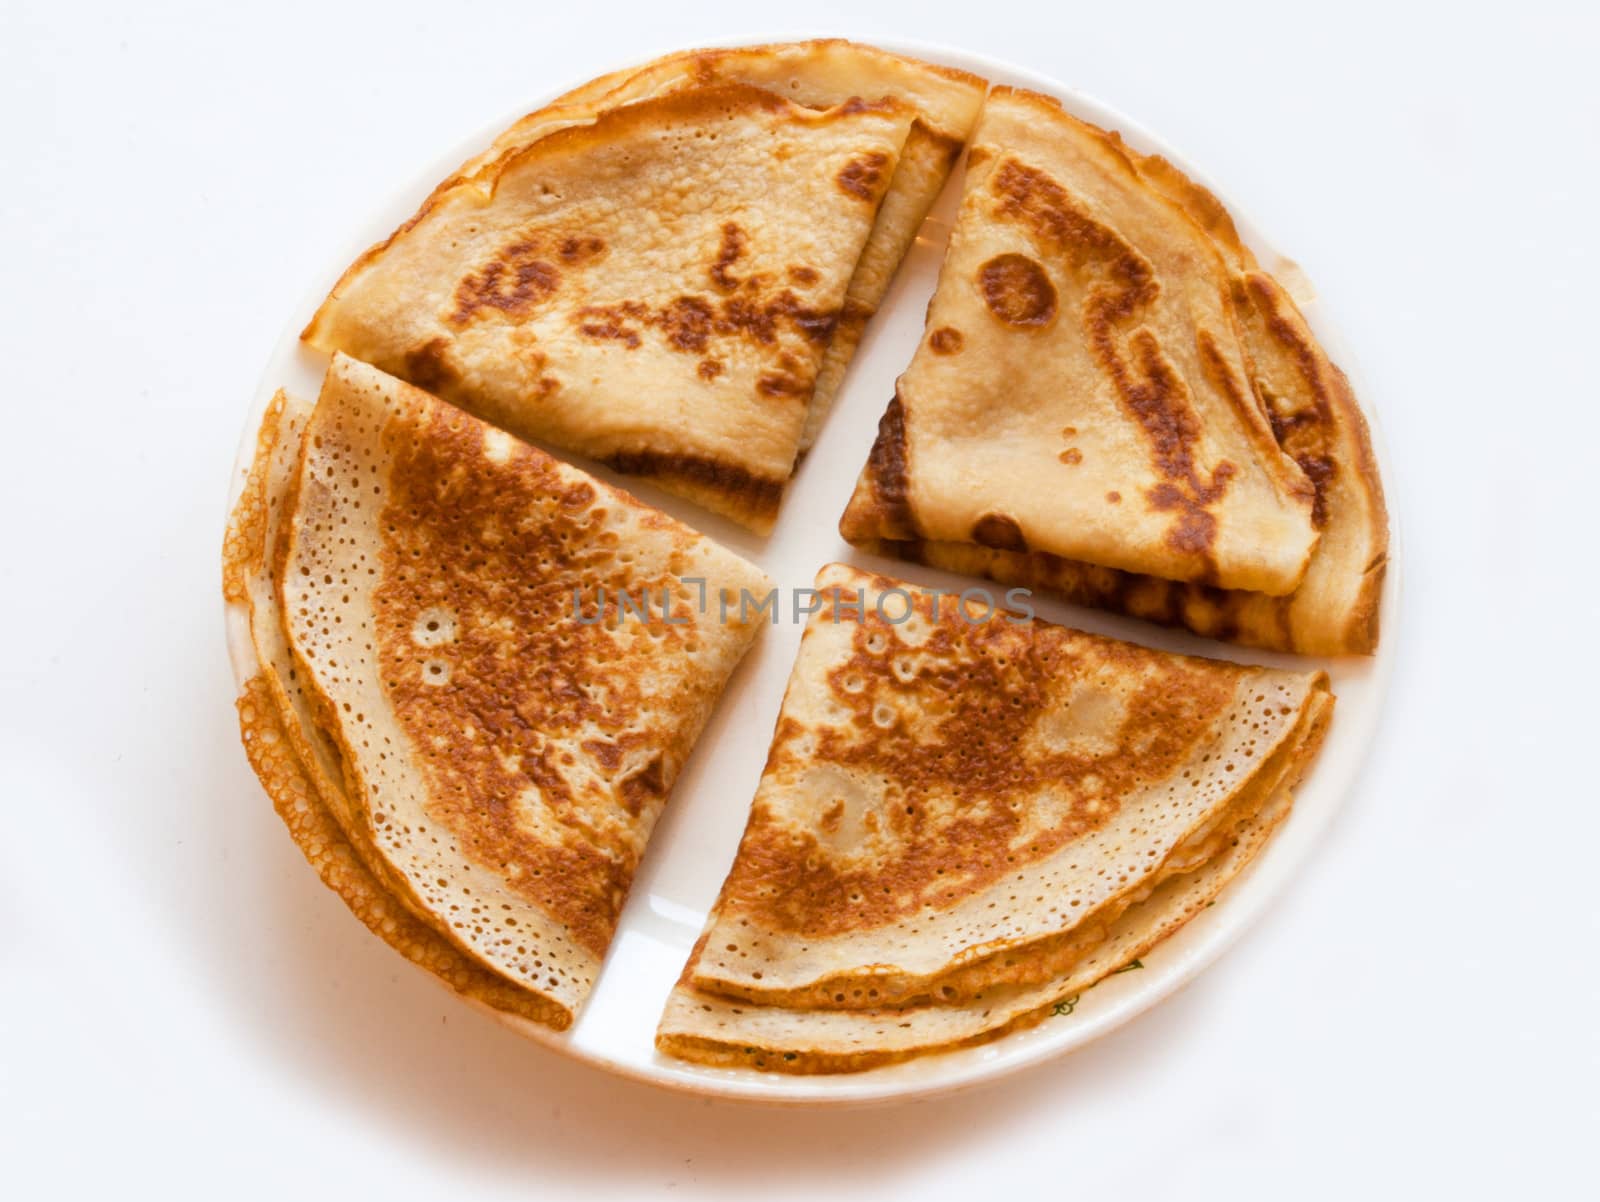 The four pancakes by raddnatt